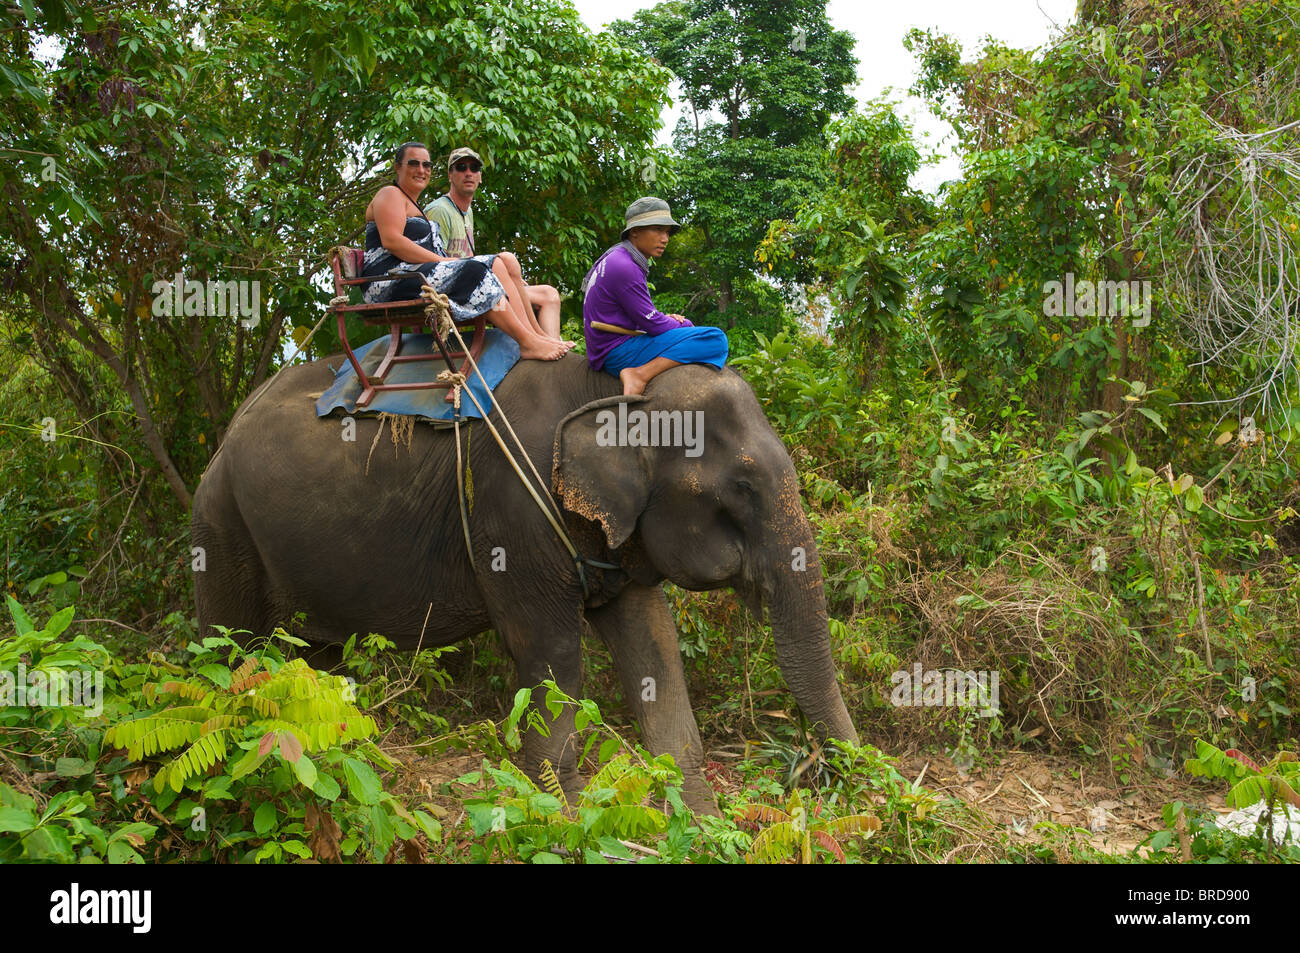 Elephant riding, Rawai, Phuket Island, Thailand Stock Photo